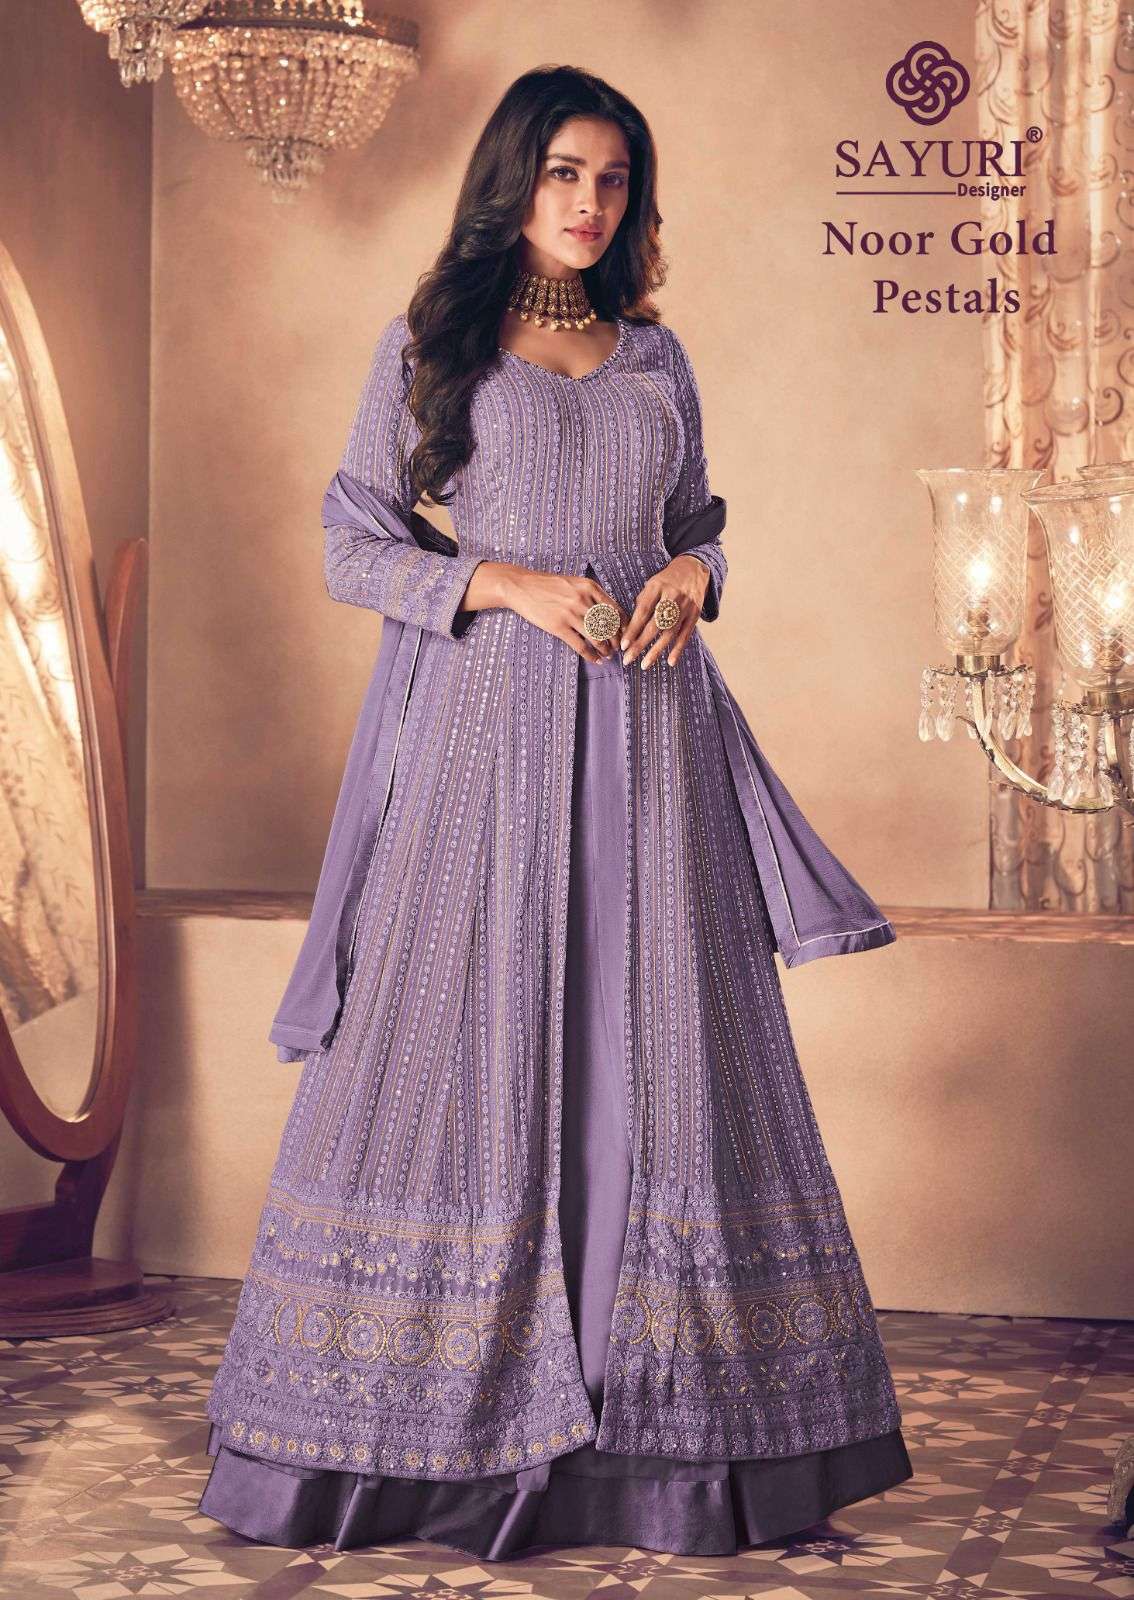 Sayuri Noor Gold Pestals 121 Colors Designer Indo Western Dress Partywear Collection